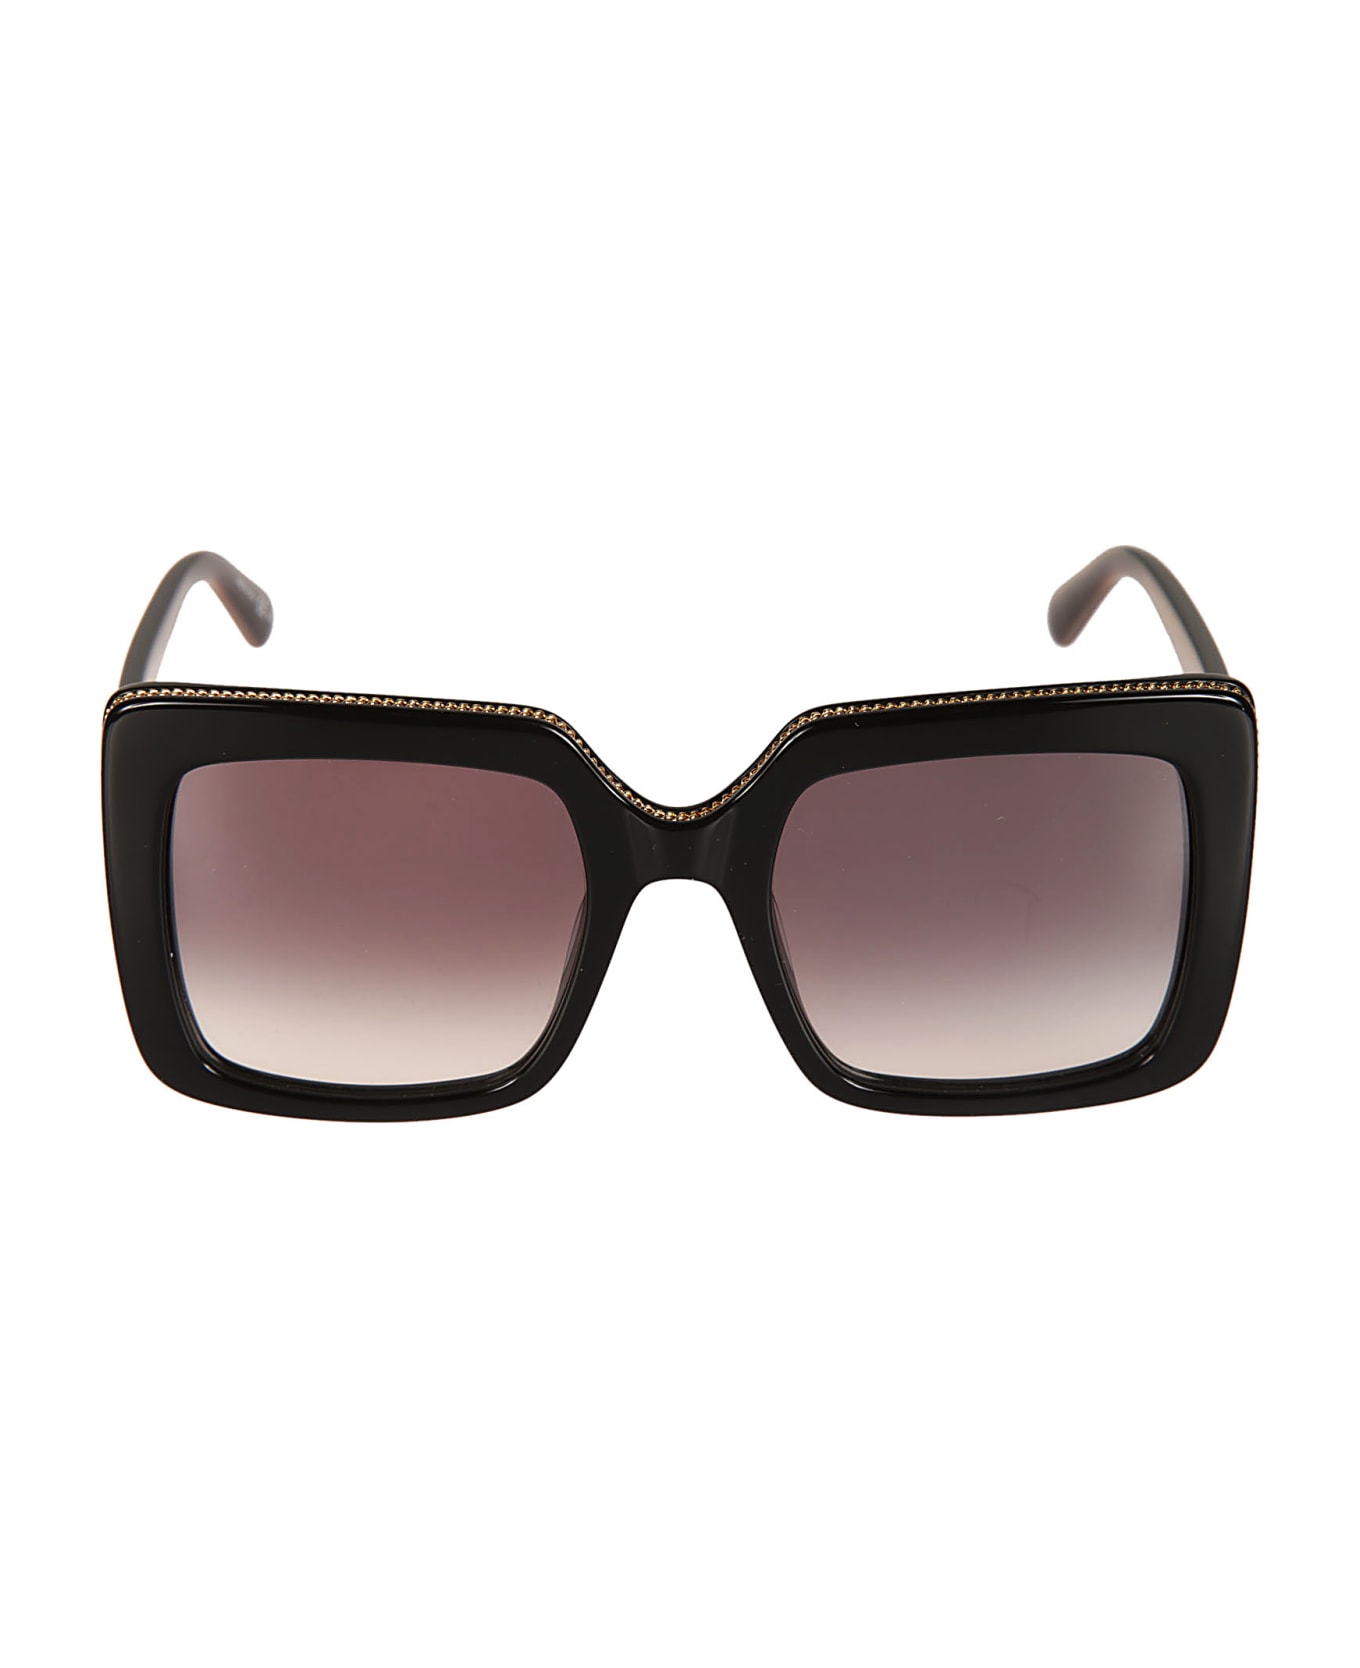 Stella McCartney Eyewear Squared Sunglasses - Black